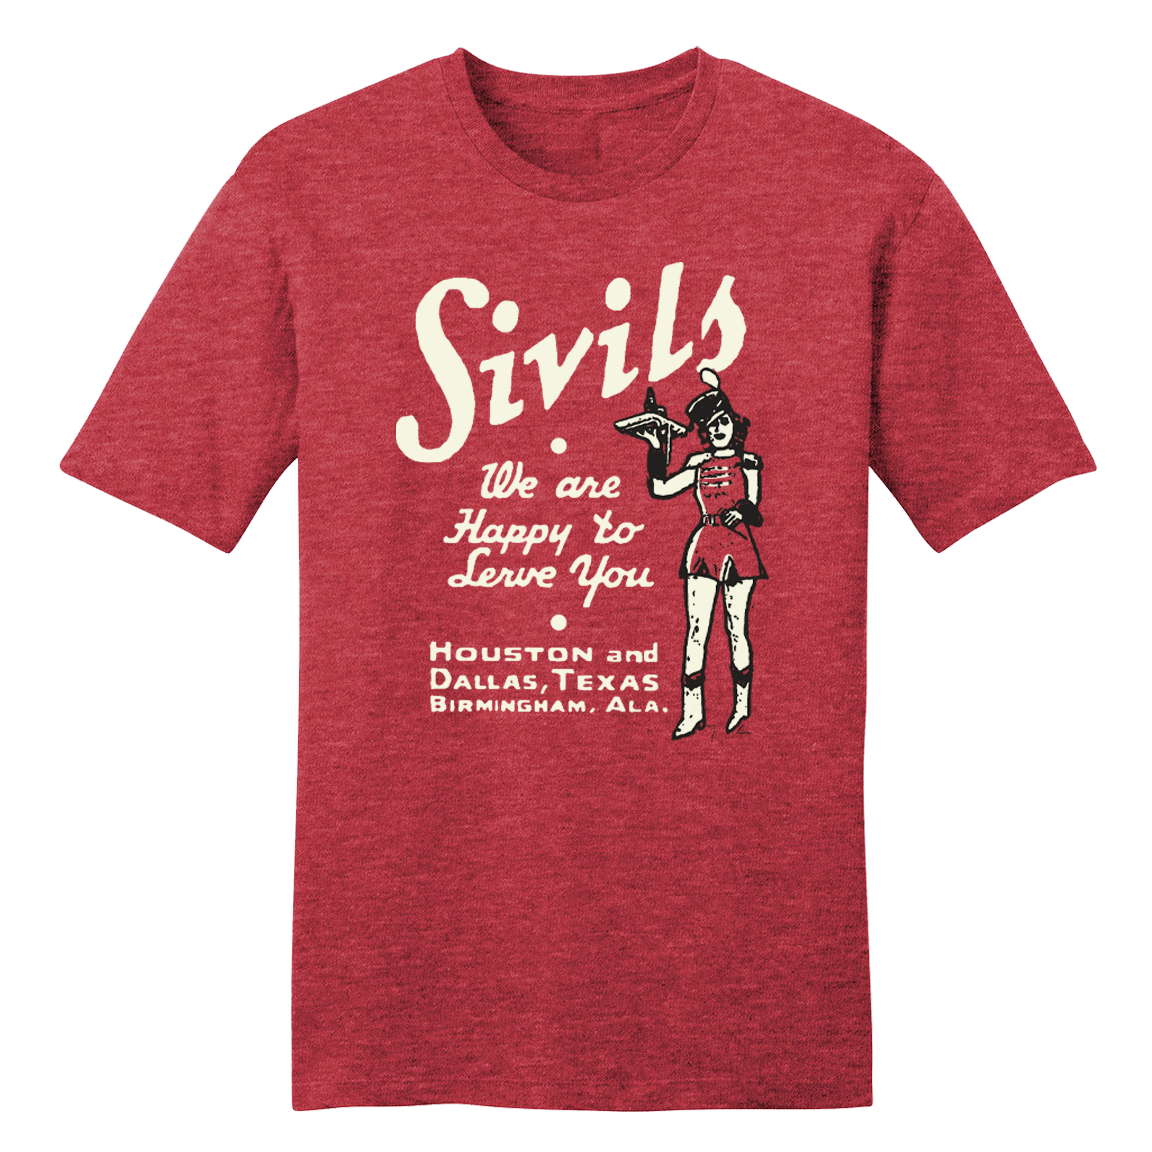 Sivils Drive-In T-shirt